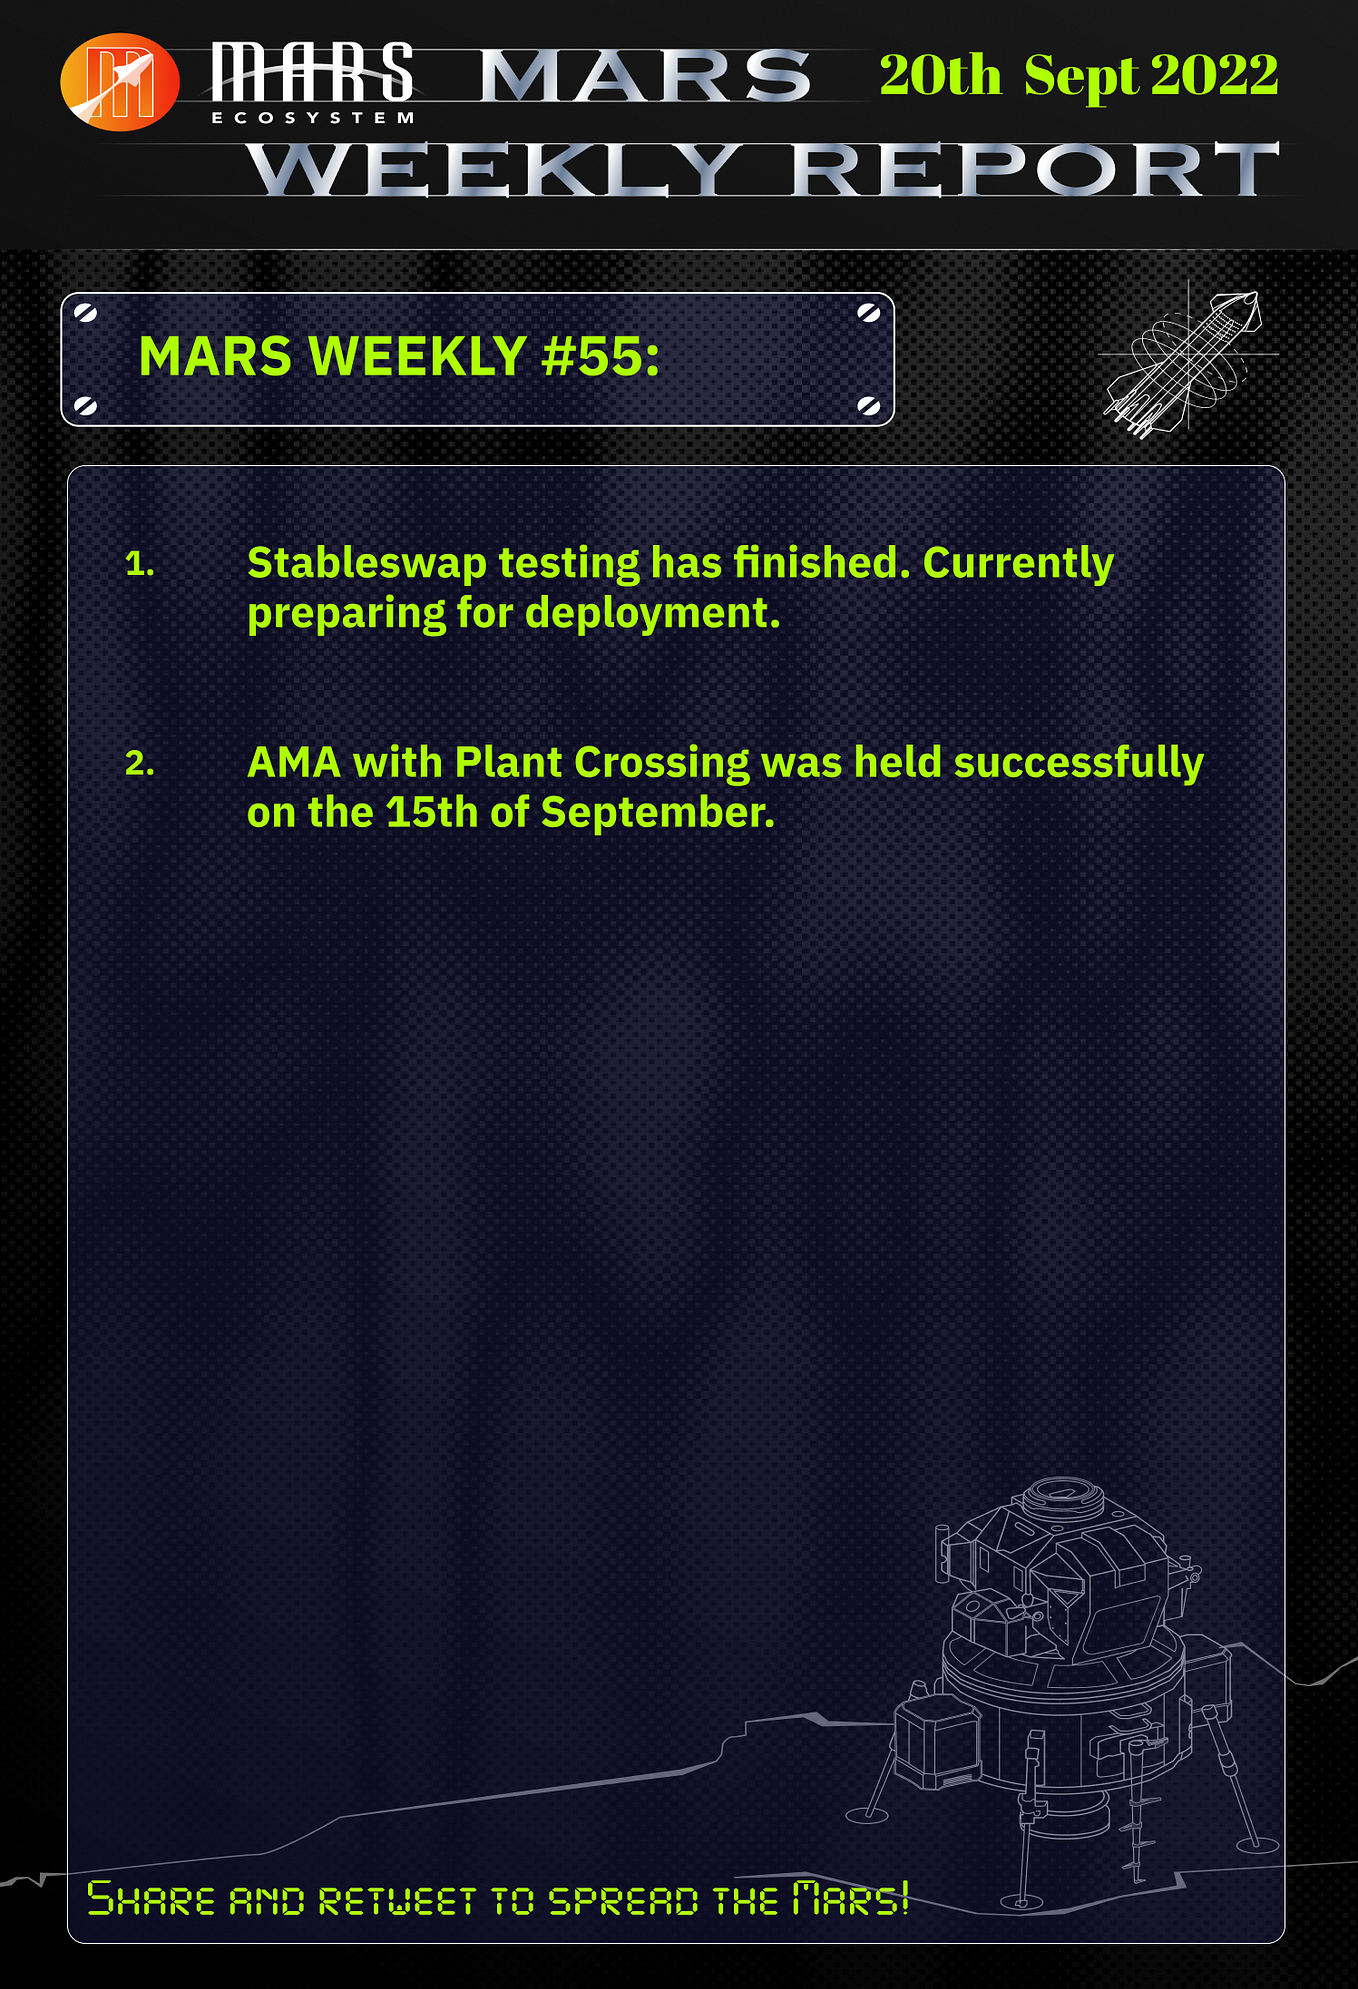 Mars Ecosystem Weekly Report #55